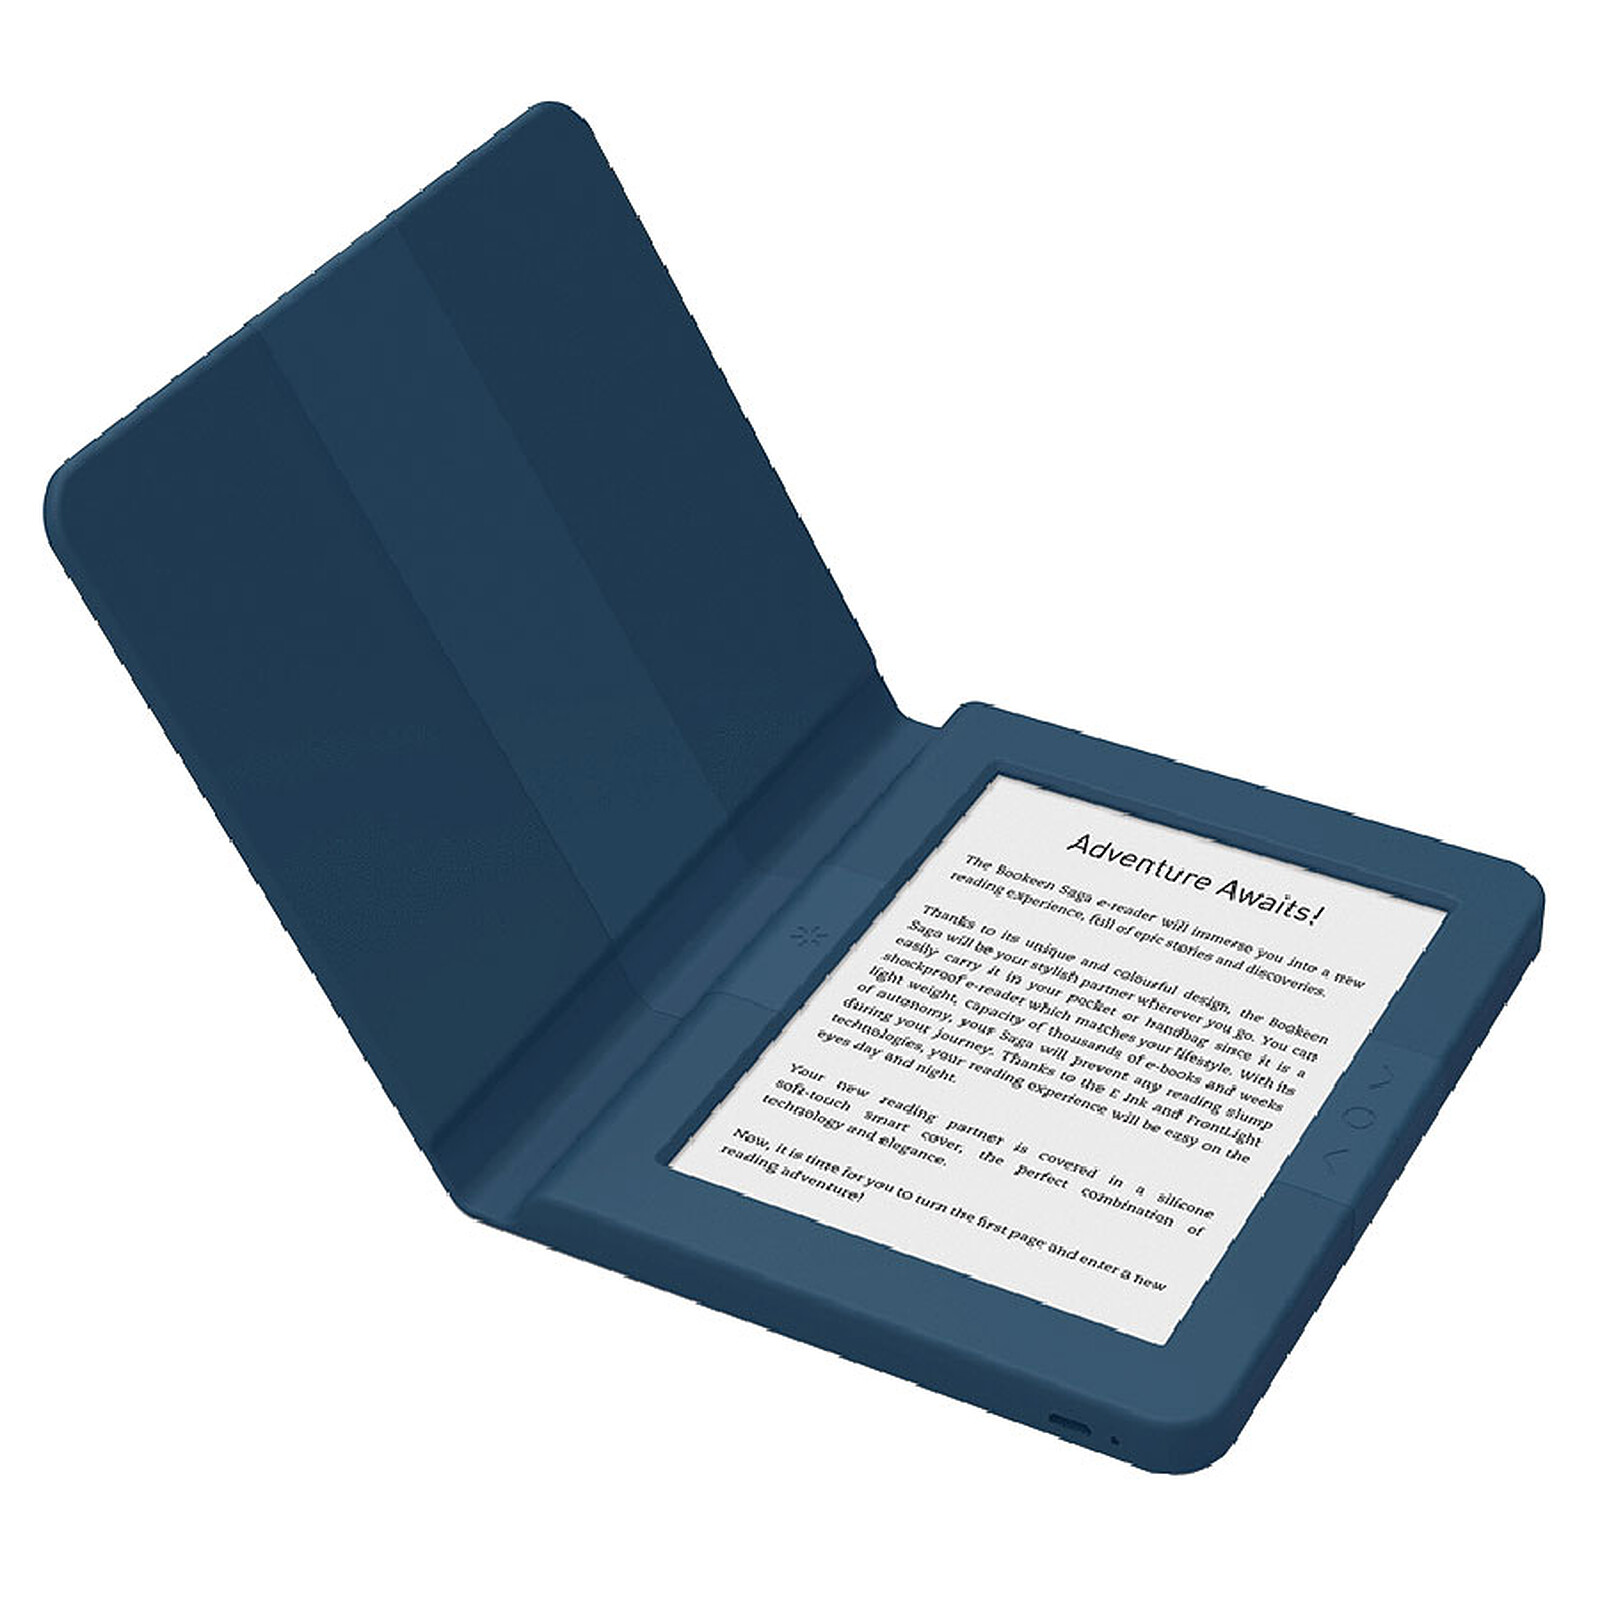 Vivlio Light HD Bleu Edition Limitée - Liseuse eBook - Garantie 3